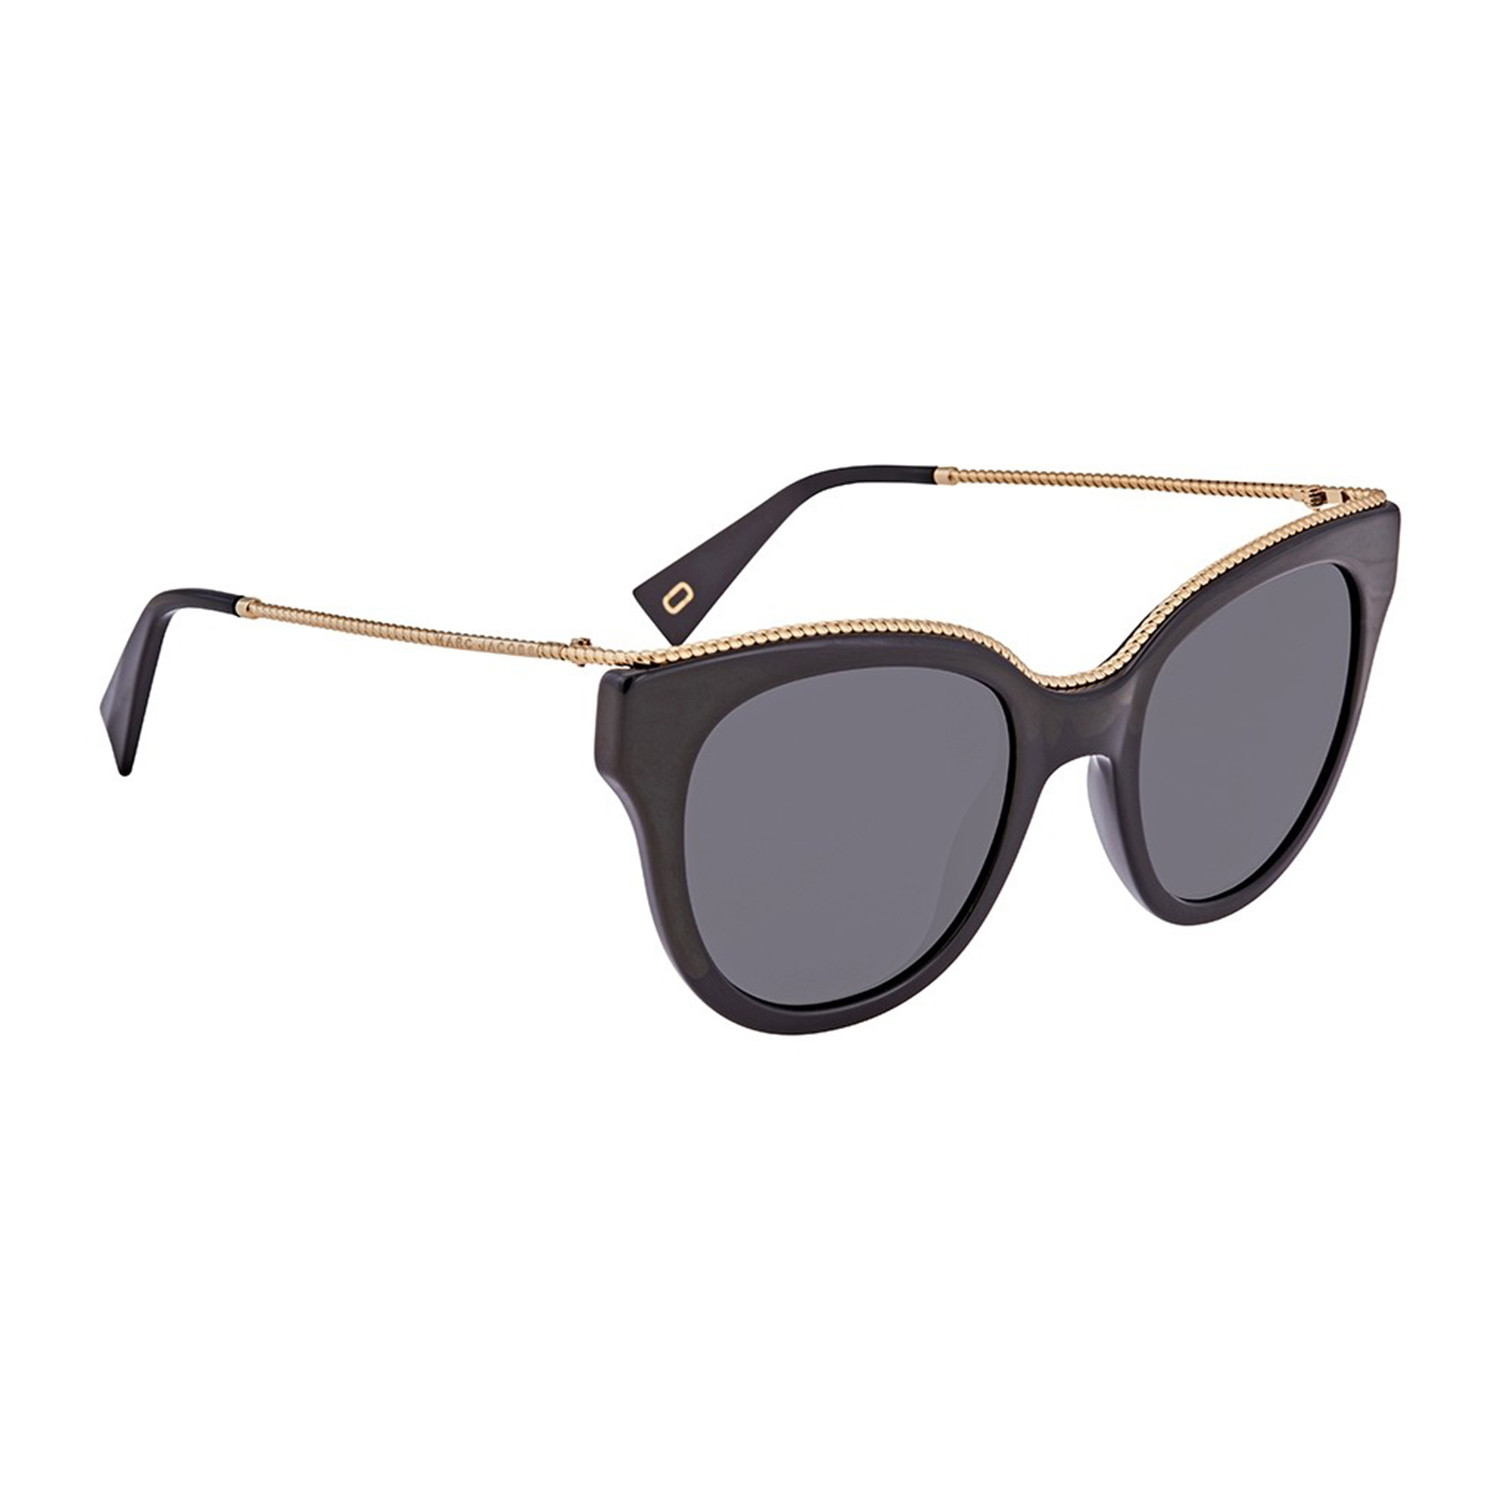 Marc Jacobs Women's Cat-Eye Sunglasses